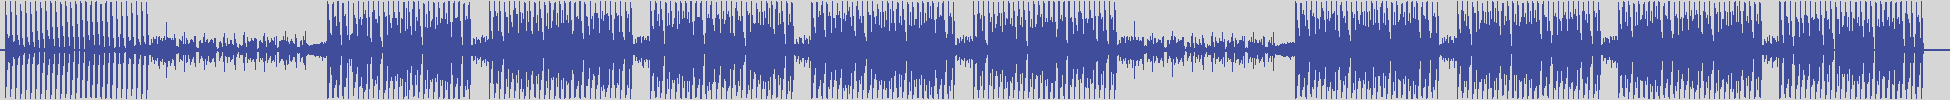 atomic_recordings [AR003] Frank Wasser - Downward [Data Mix] audio wave form